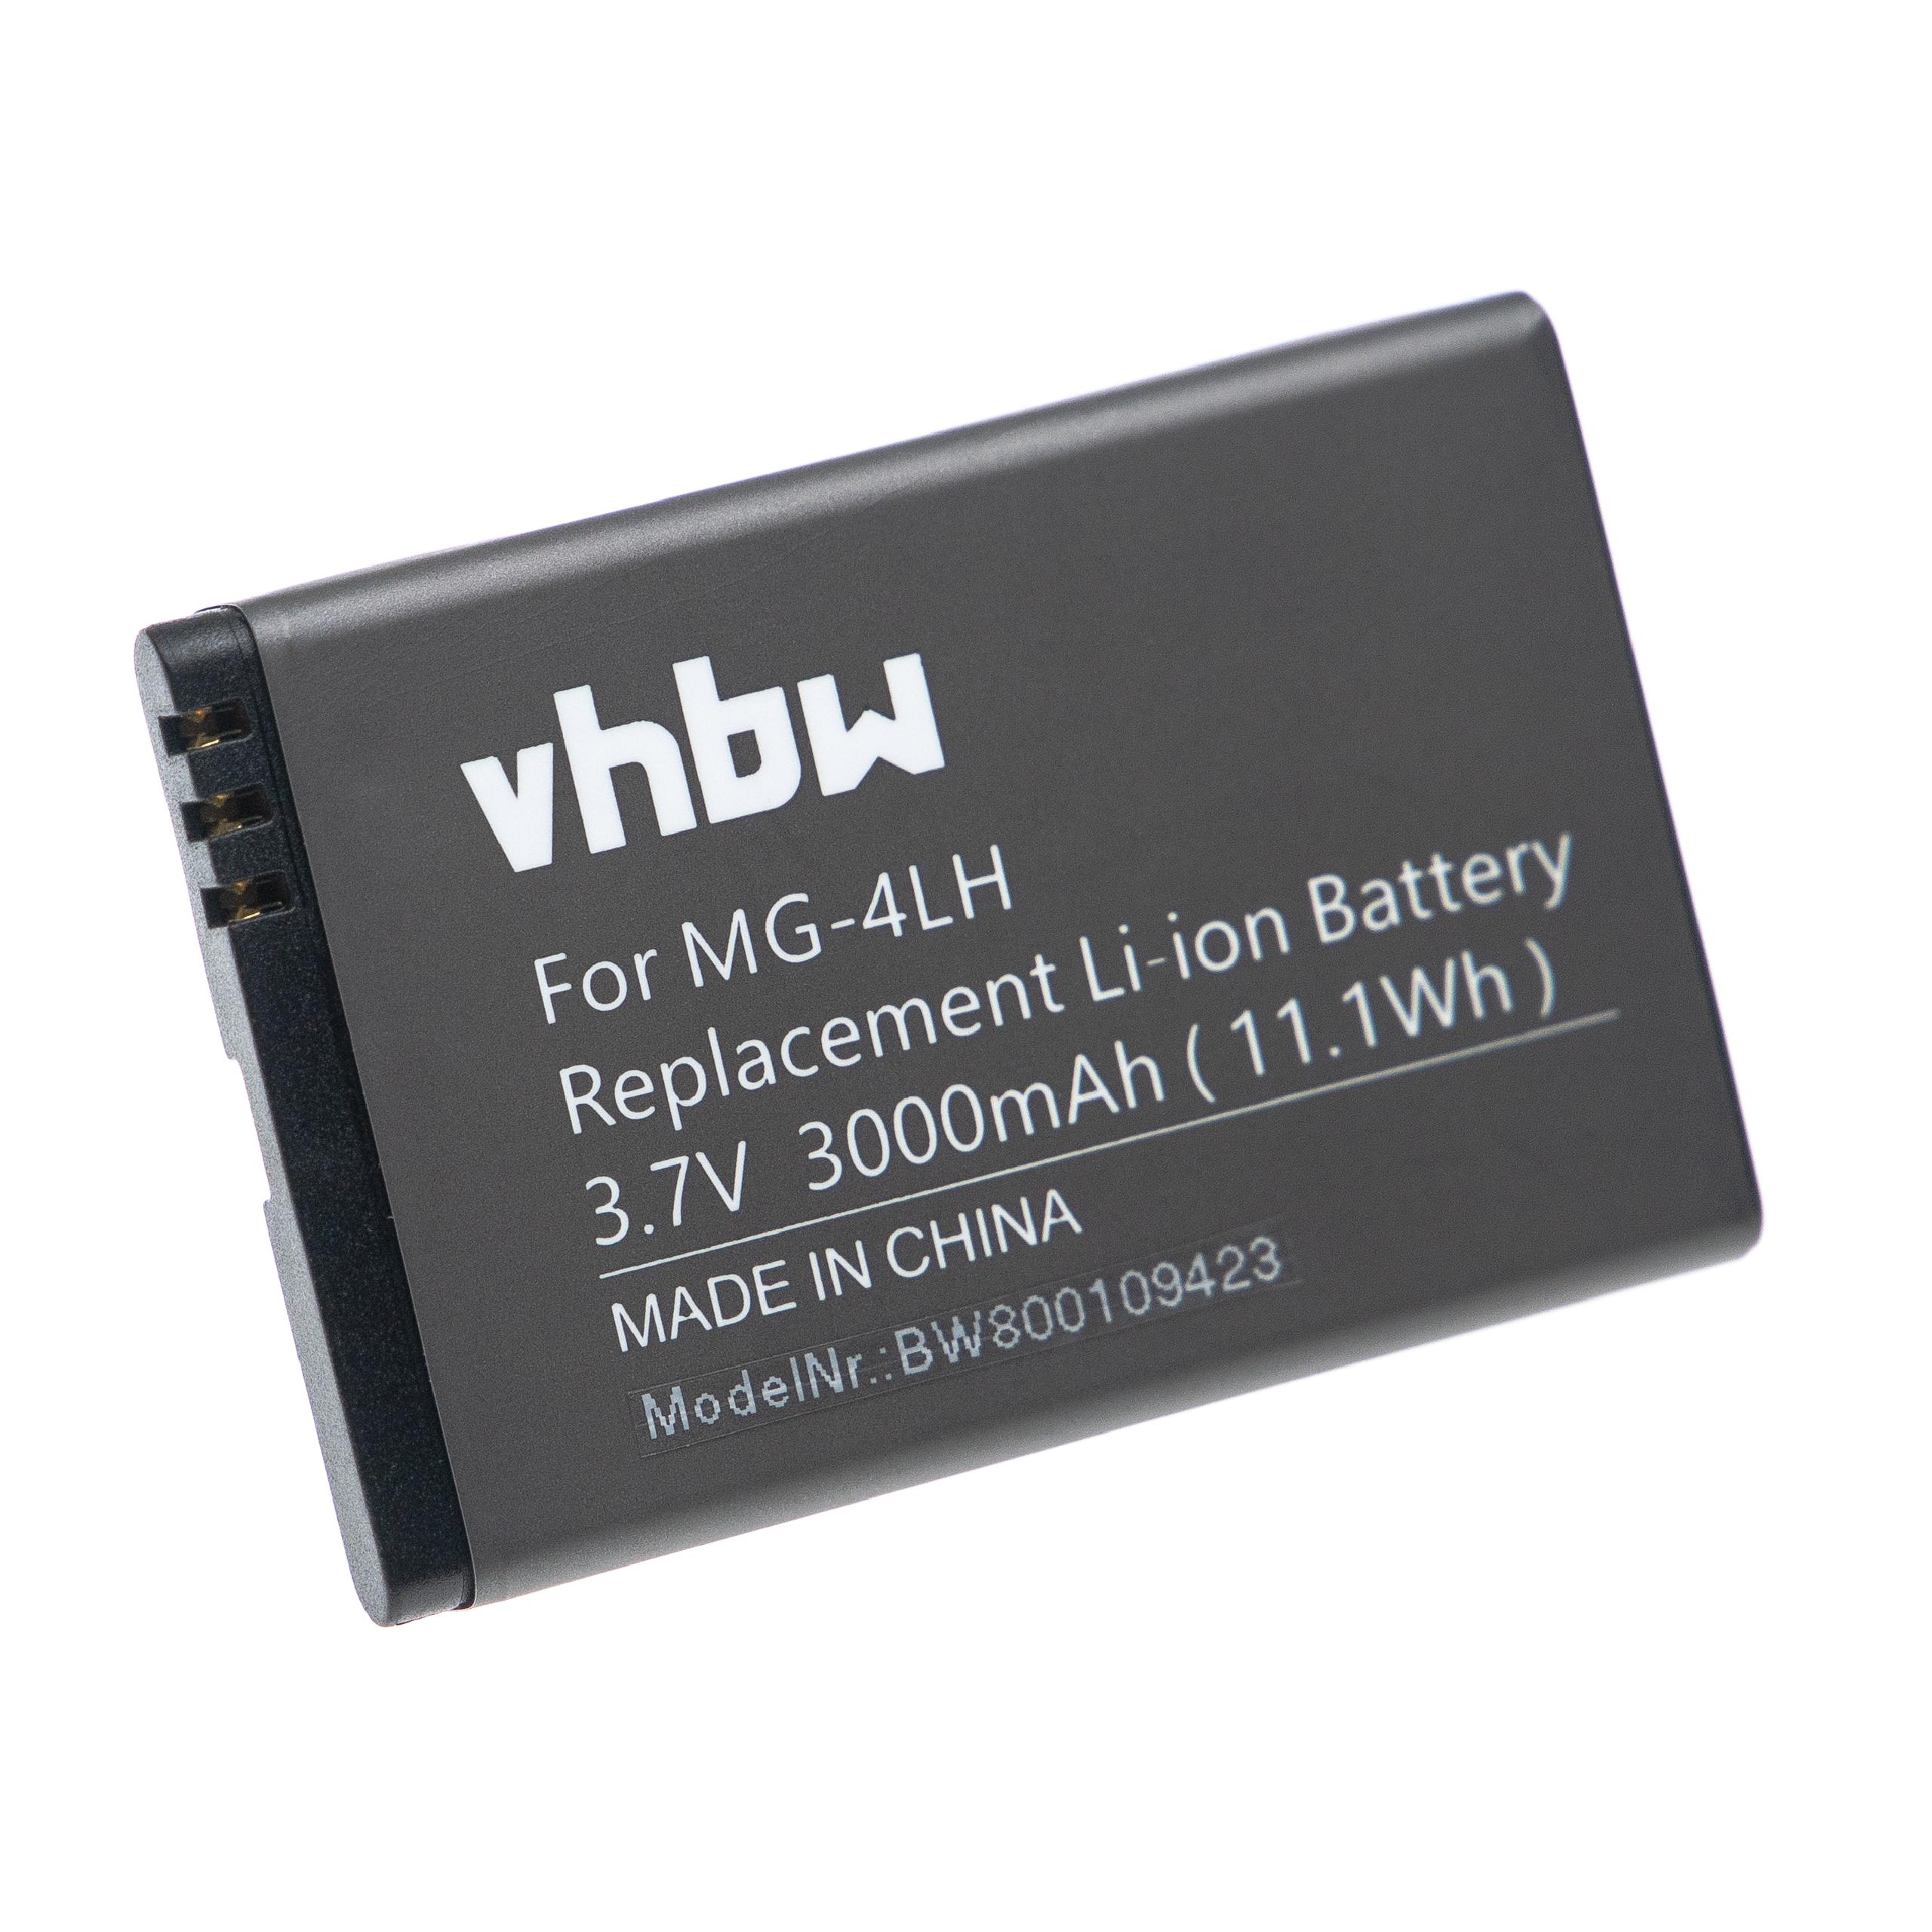 Batterie remplace Spectra MG-4LH, TS21878, 206465 pour navigation GPS - 3000mAh 3,7V Li-ion